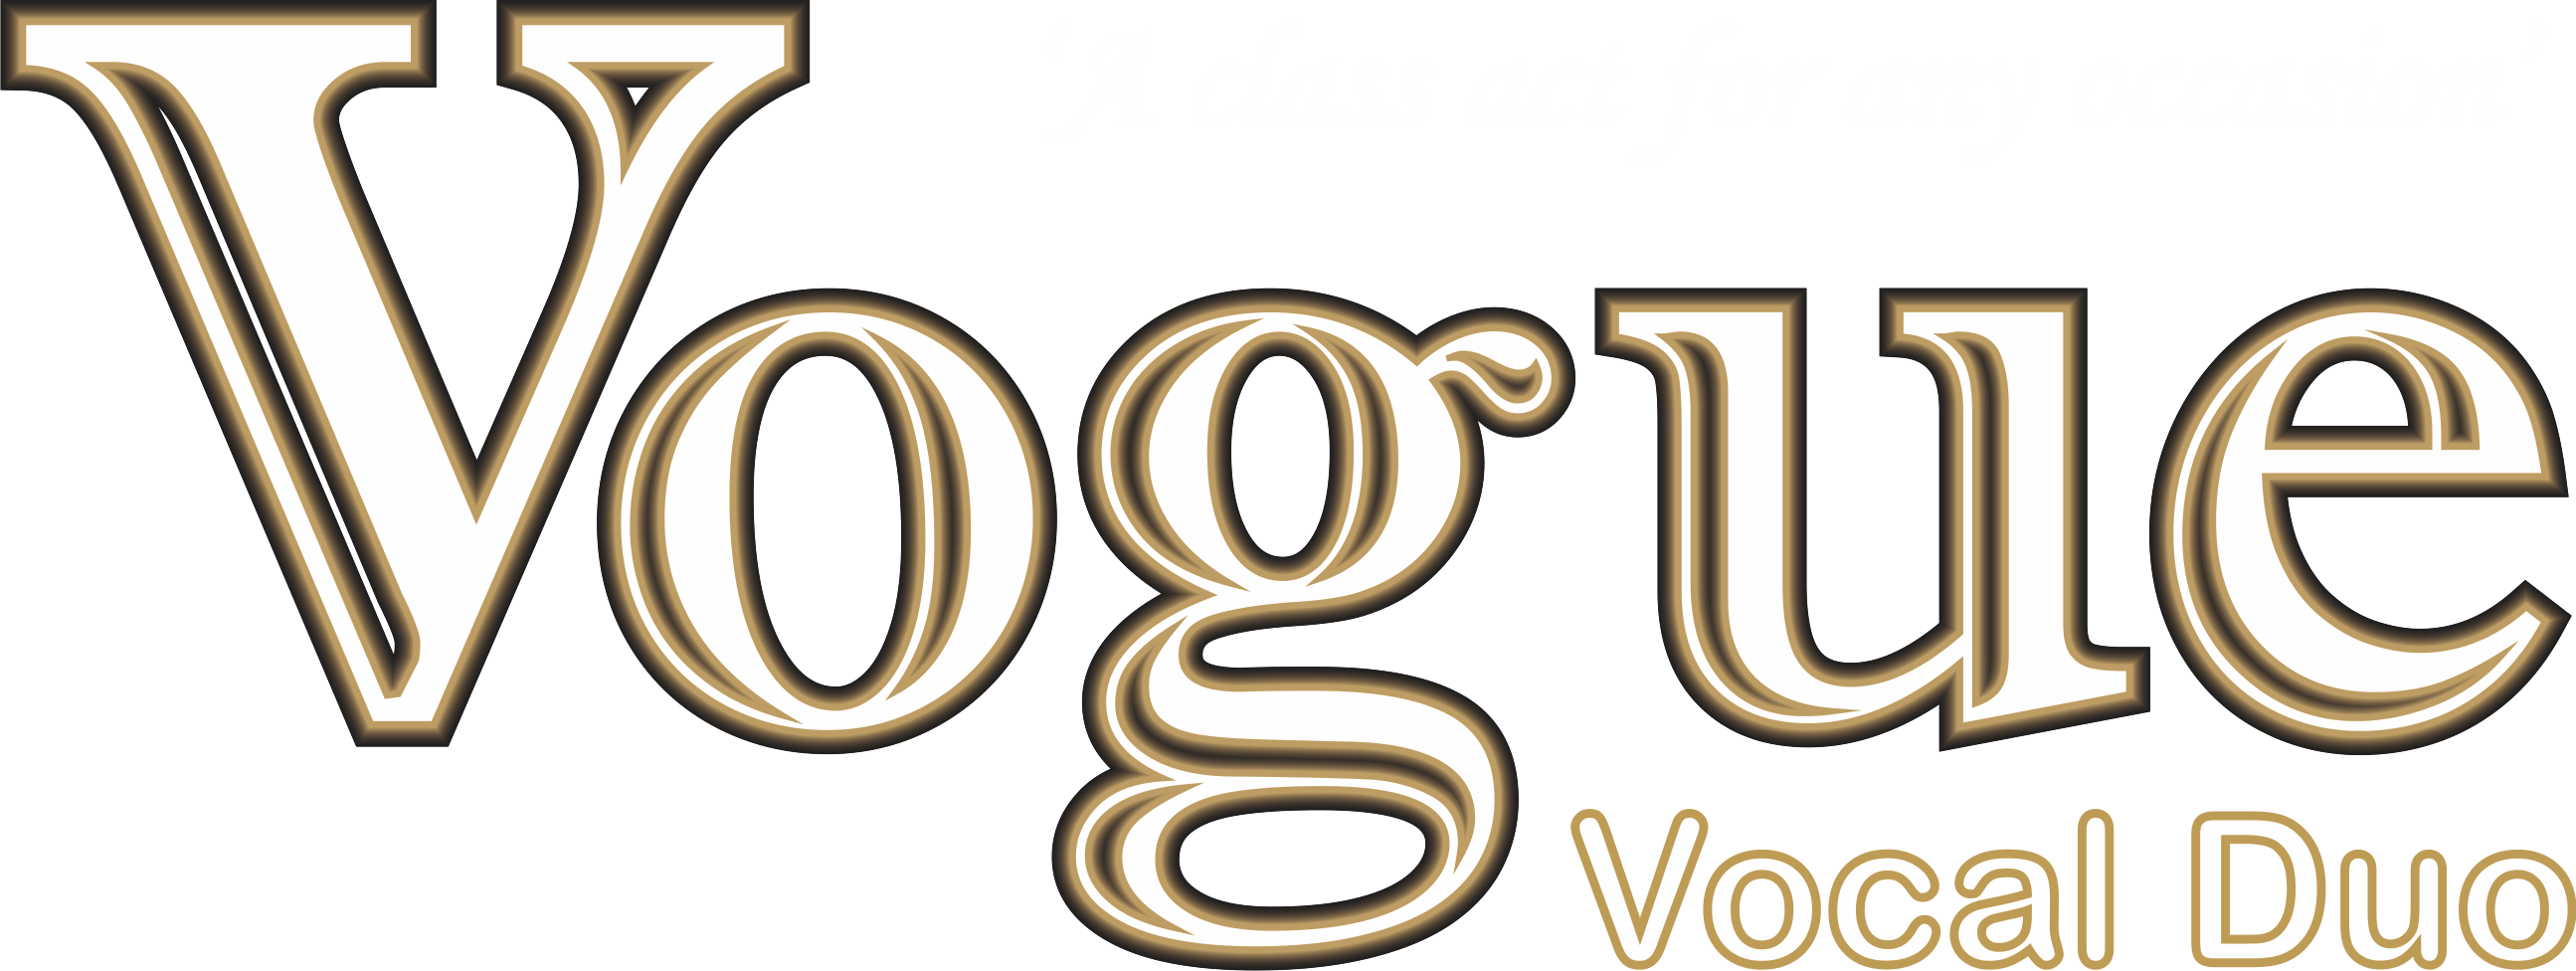 vogue vocal png logo #5751